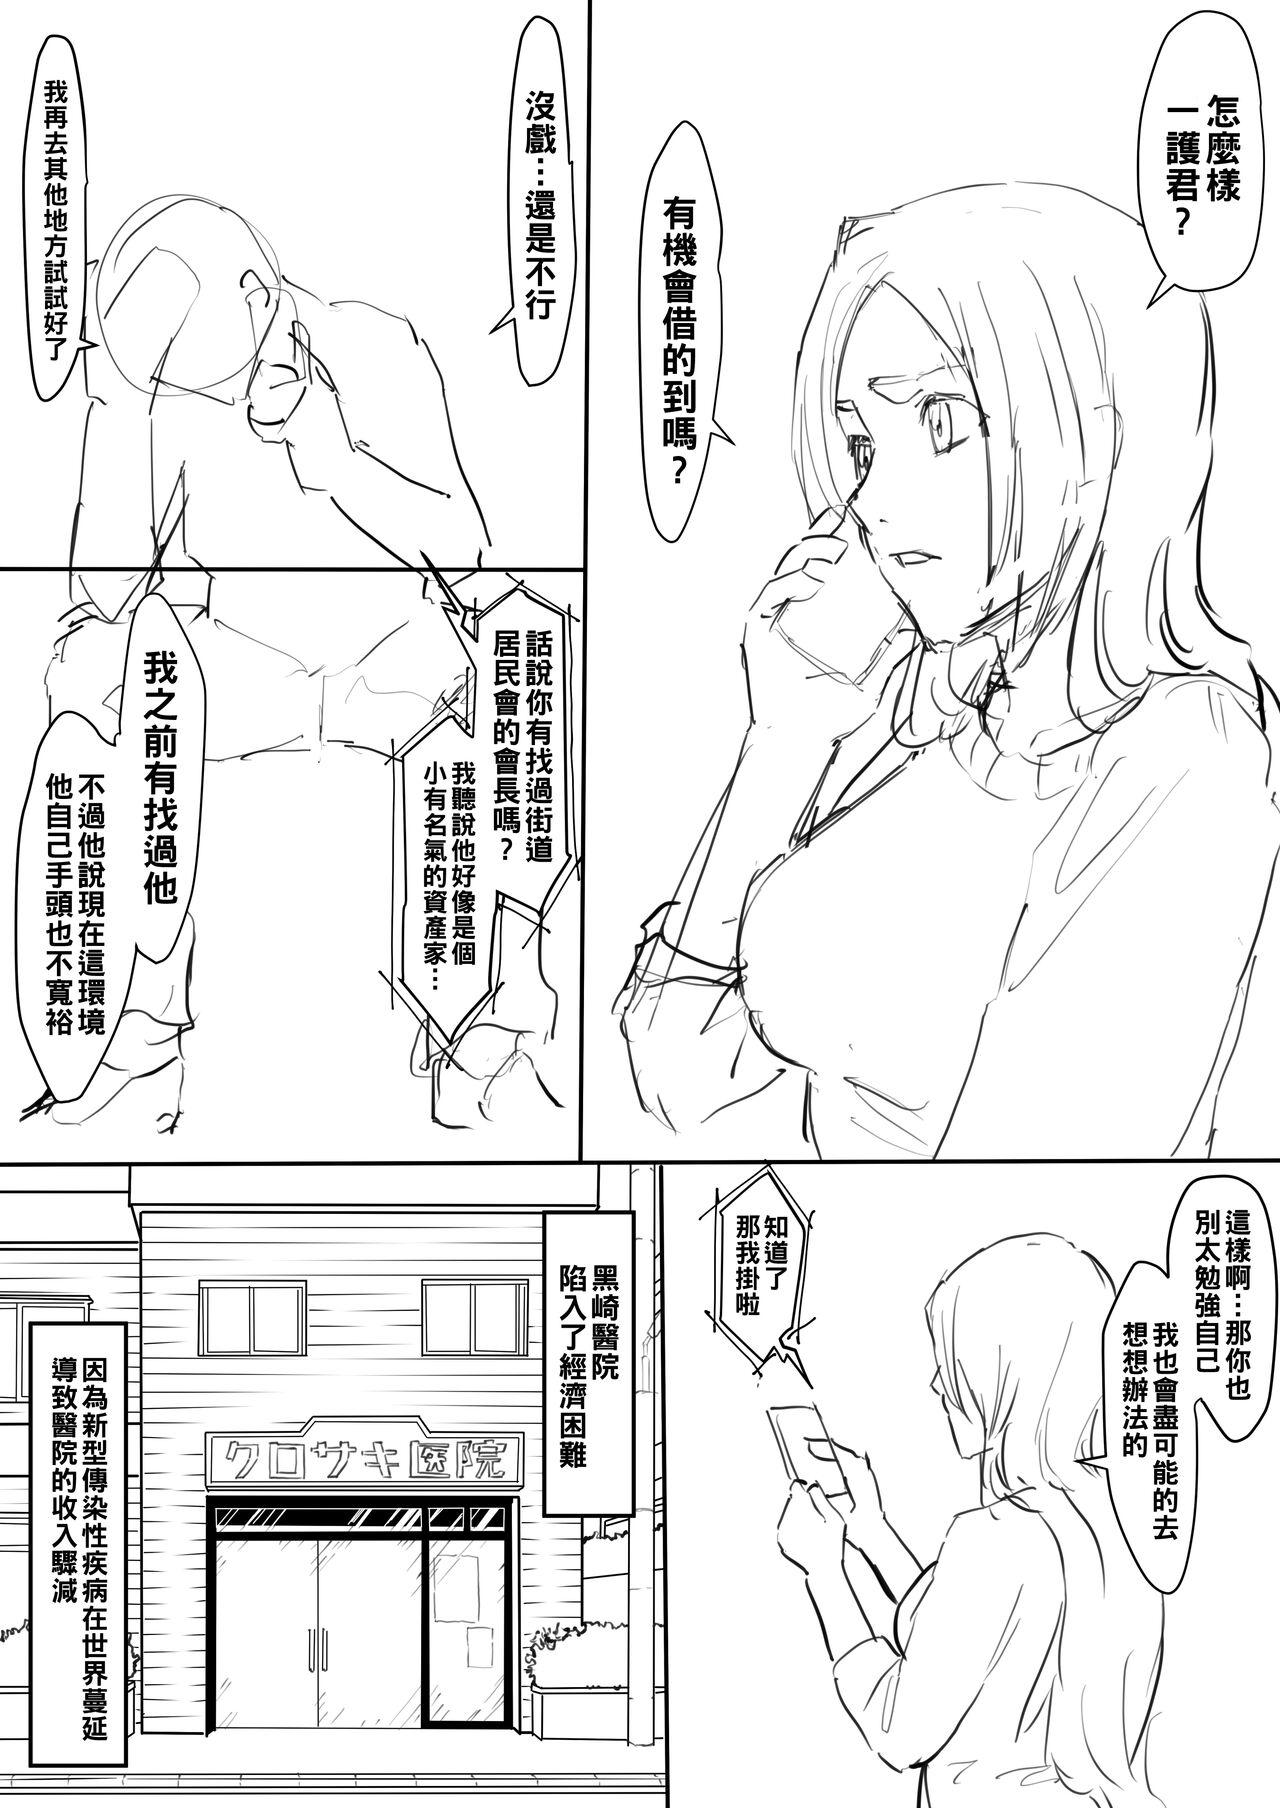 Blowjob Orihime Manga - Bleach Alt - Page 1